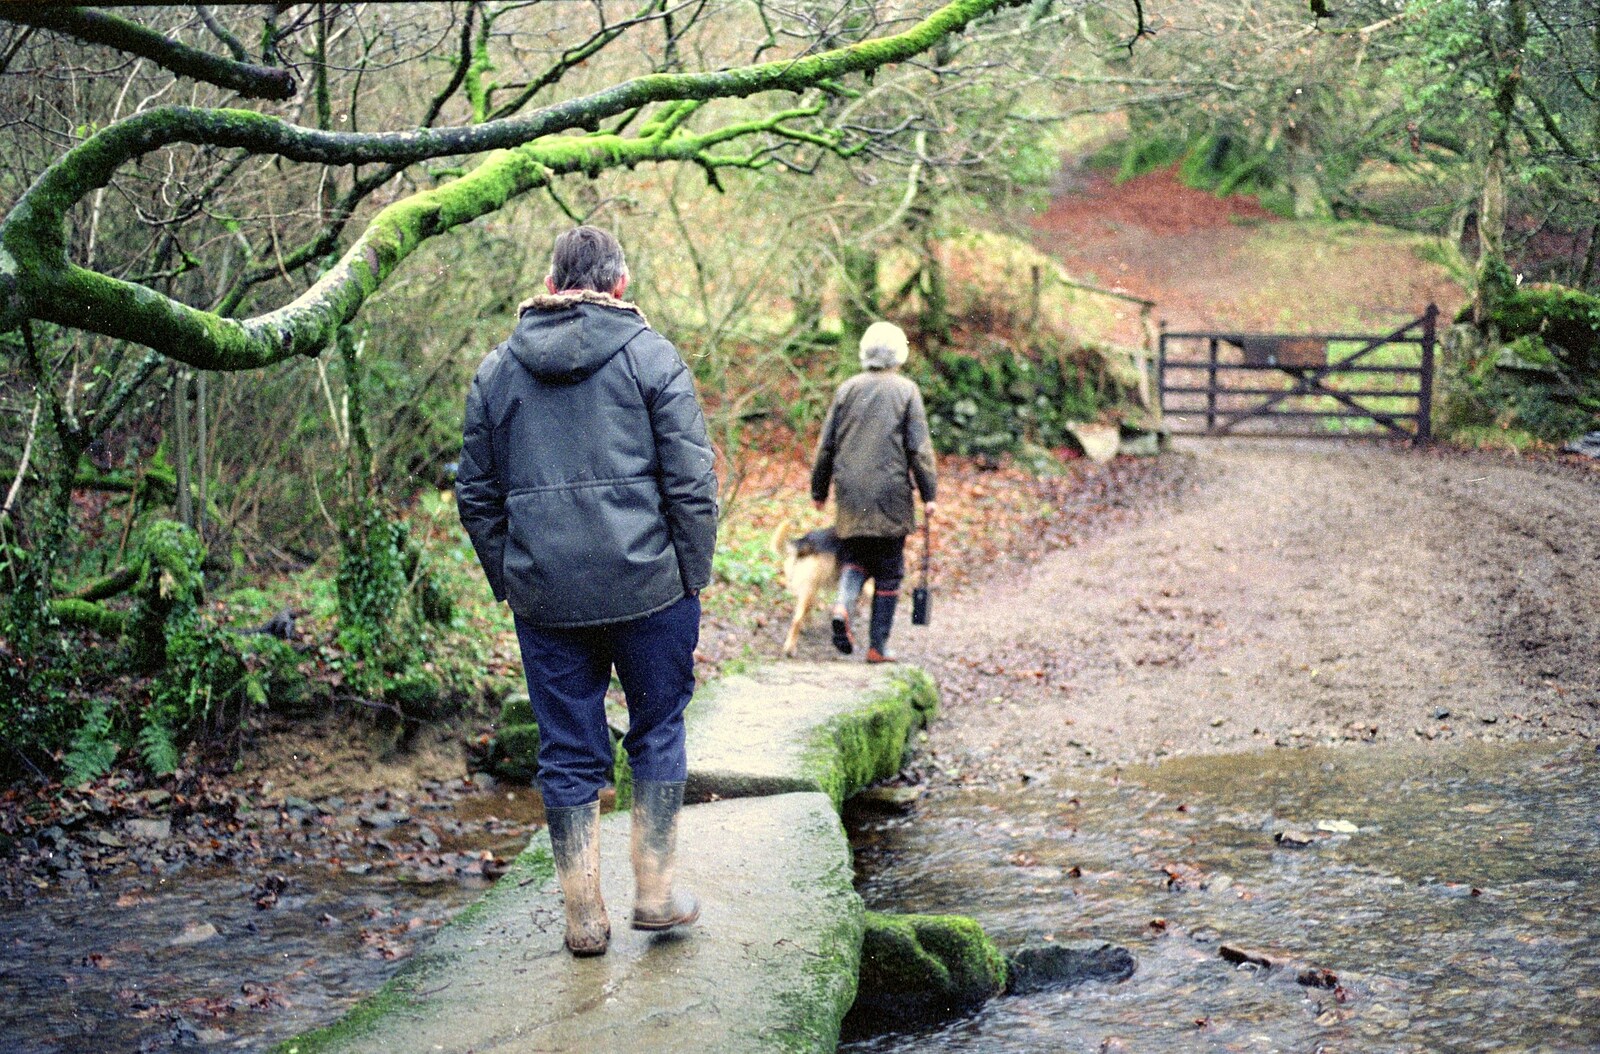 Bill crosses a stream via a stone bridge from Christmas at Pitt Farm, Harbertonford, Devon - 25th December 1988